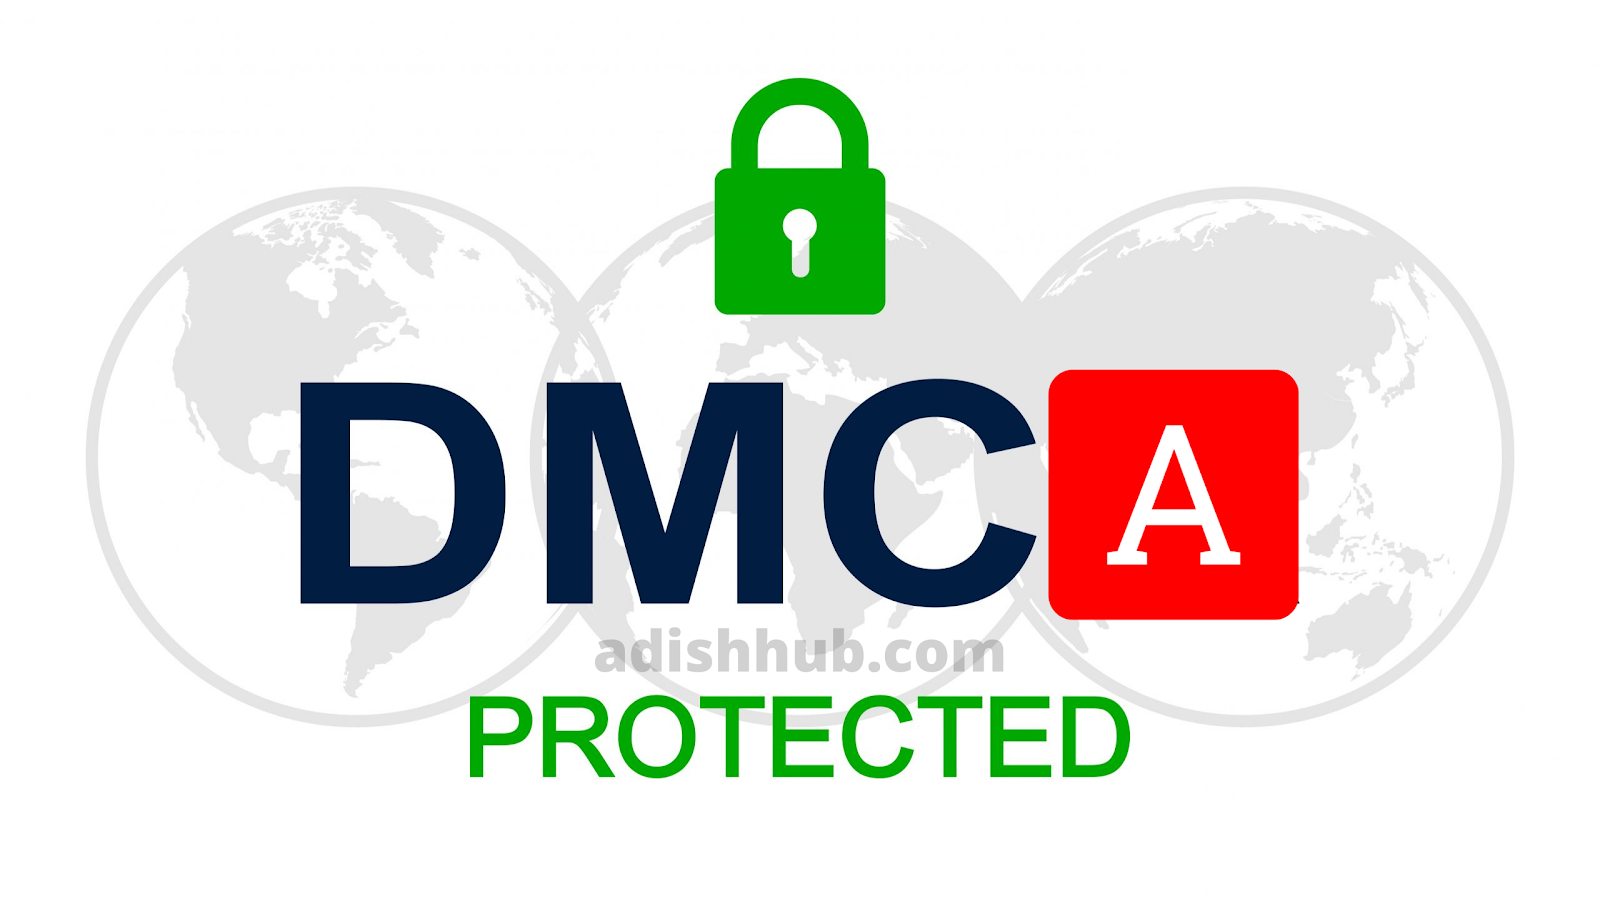 adishhub.com DMCA Policy Protected